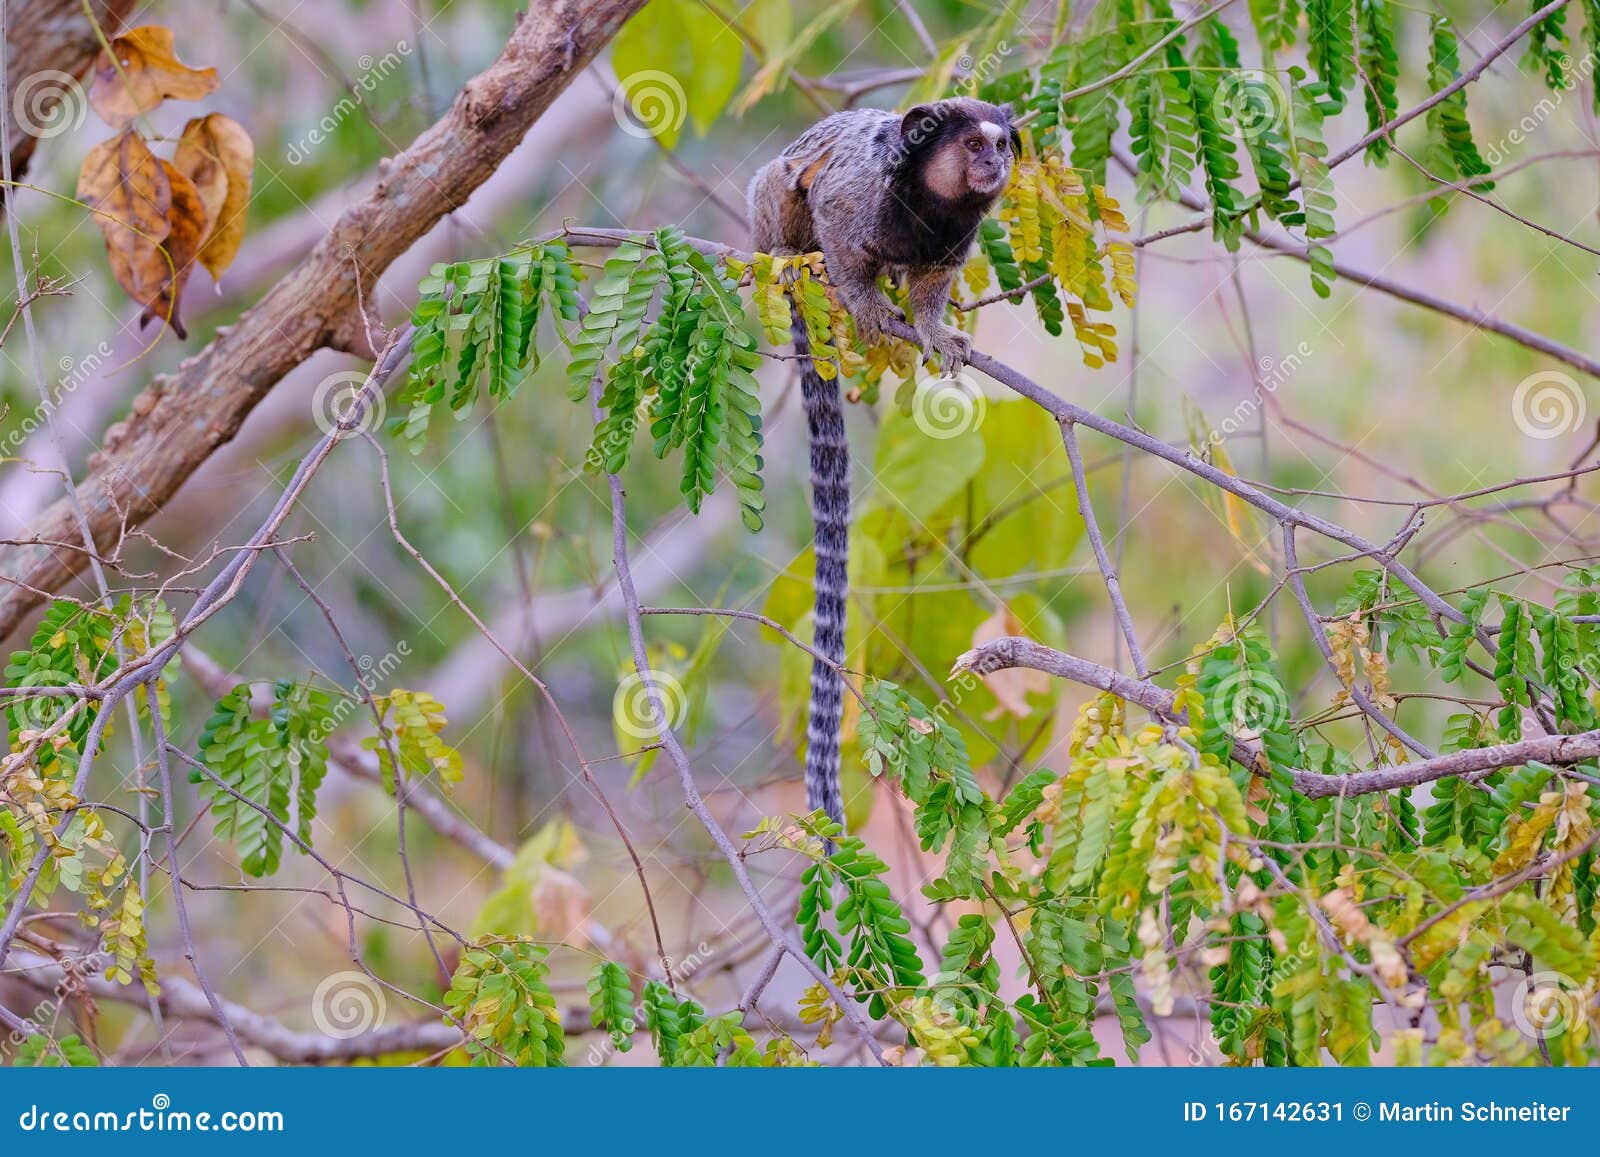 black tufted marmoset, callithrix penicillata, sitting on a branch in the trees at poco encantado, chapada diamantina